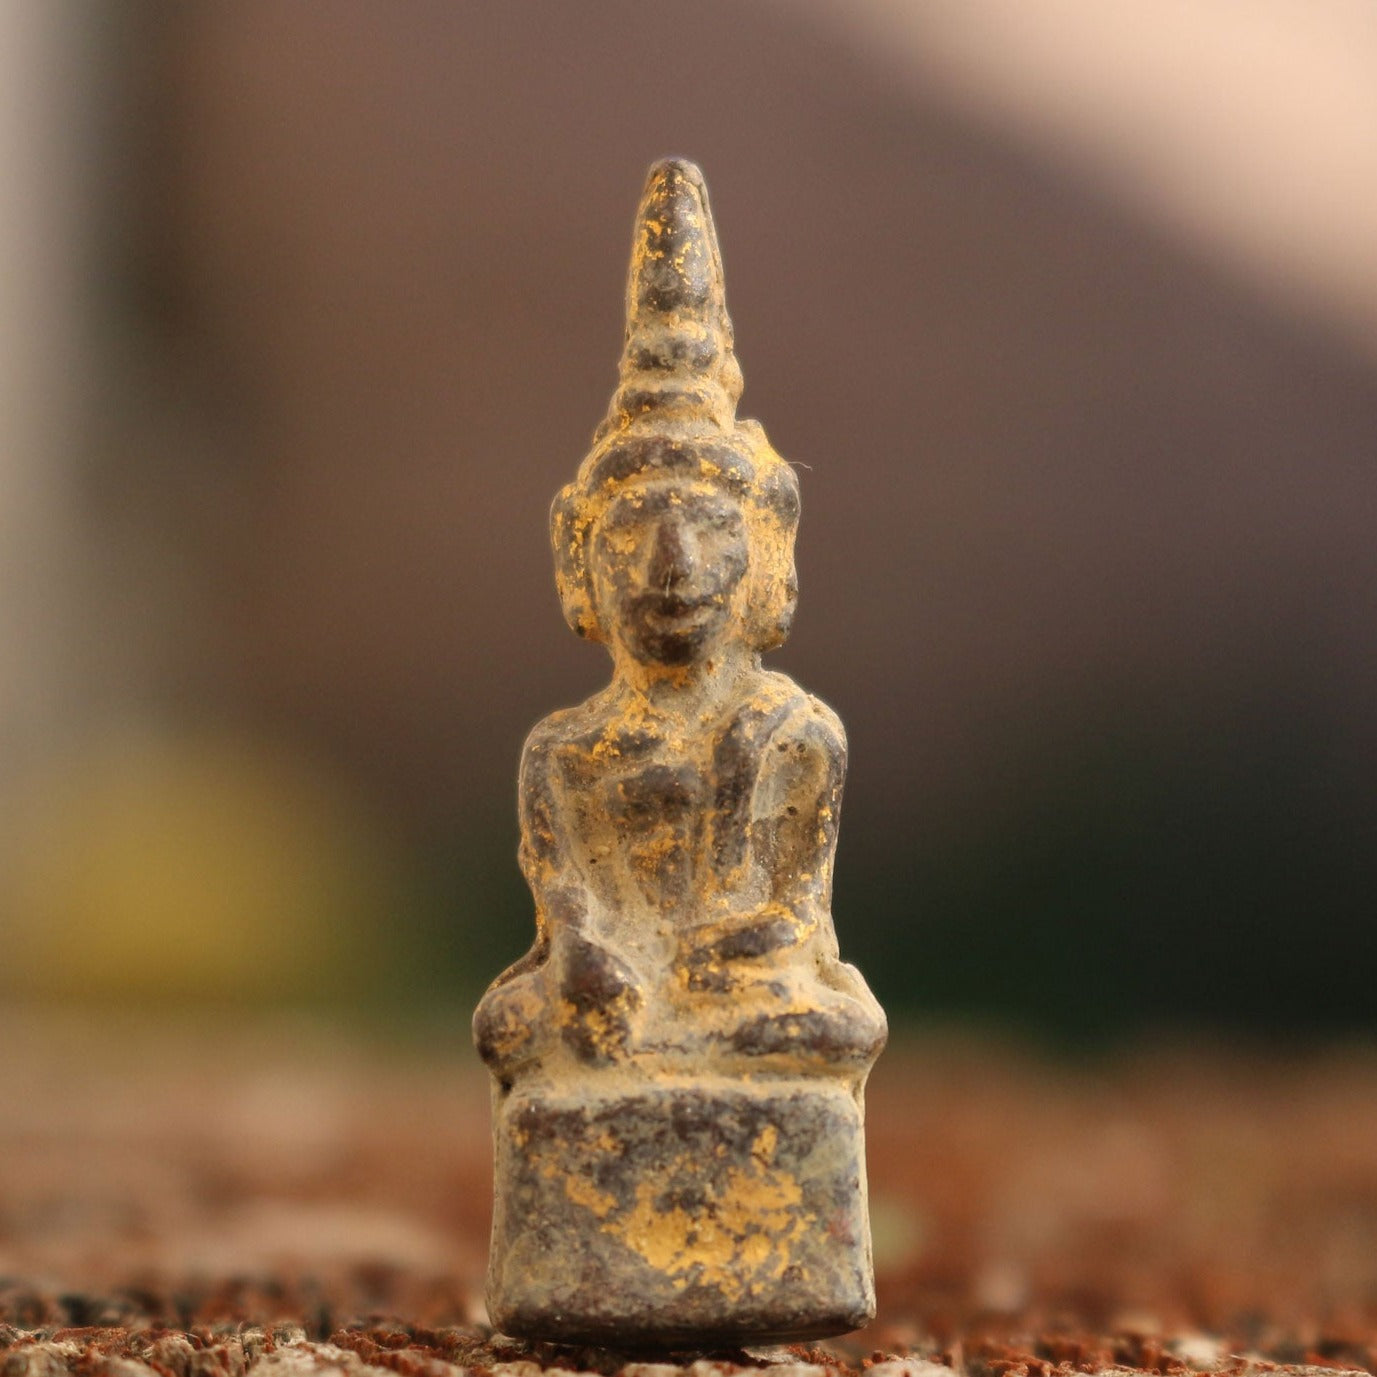 Tiny Laotian Meditating Buddha Statue